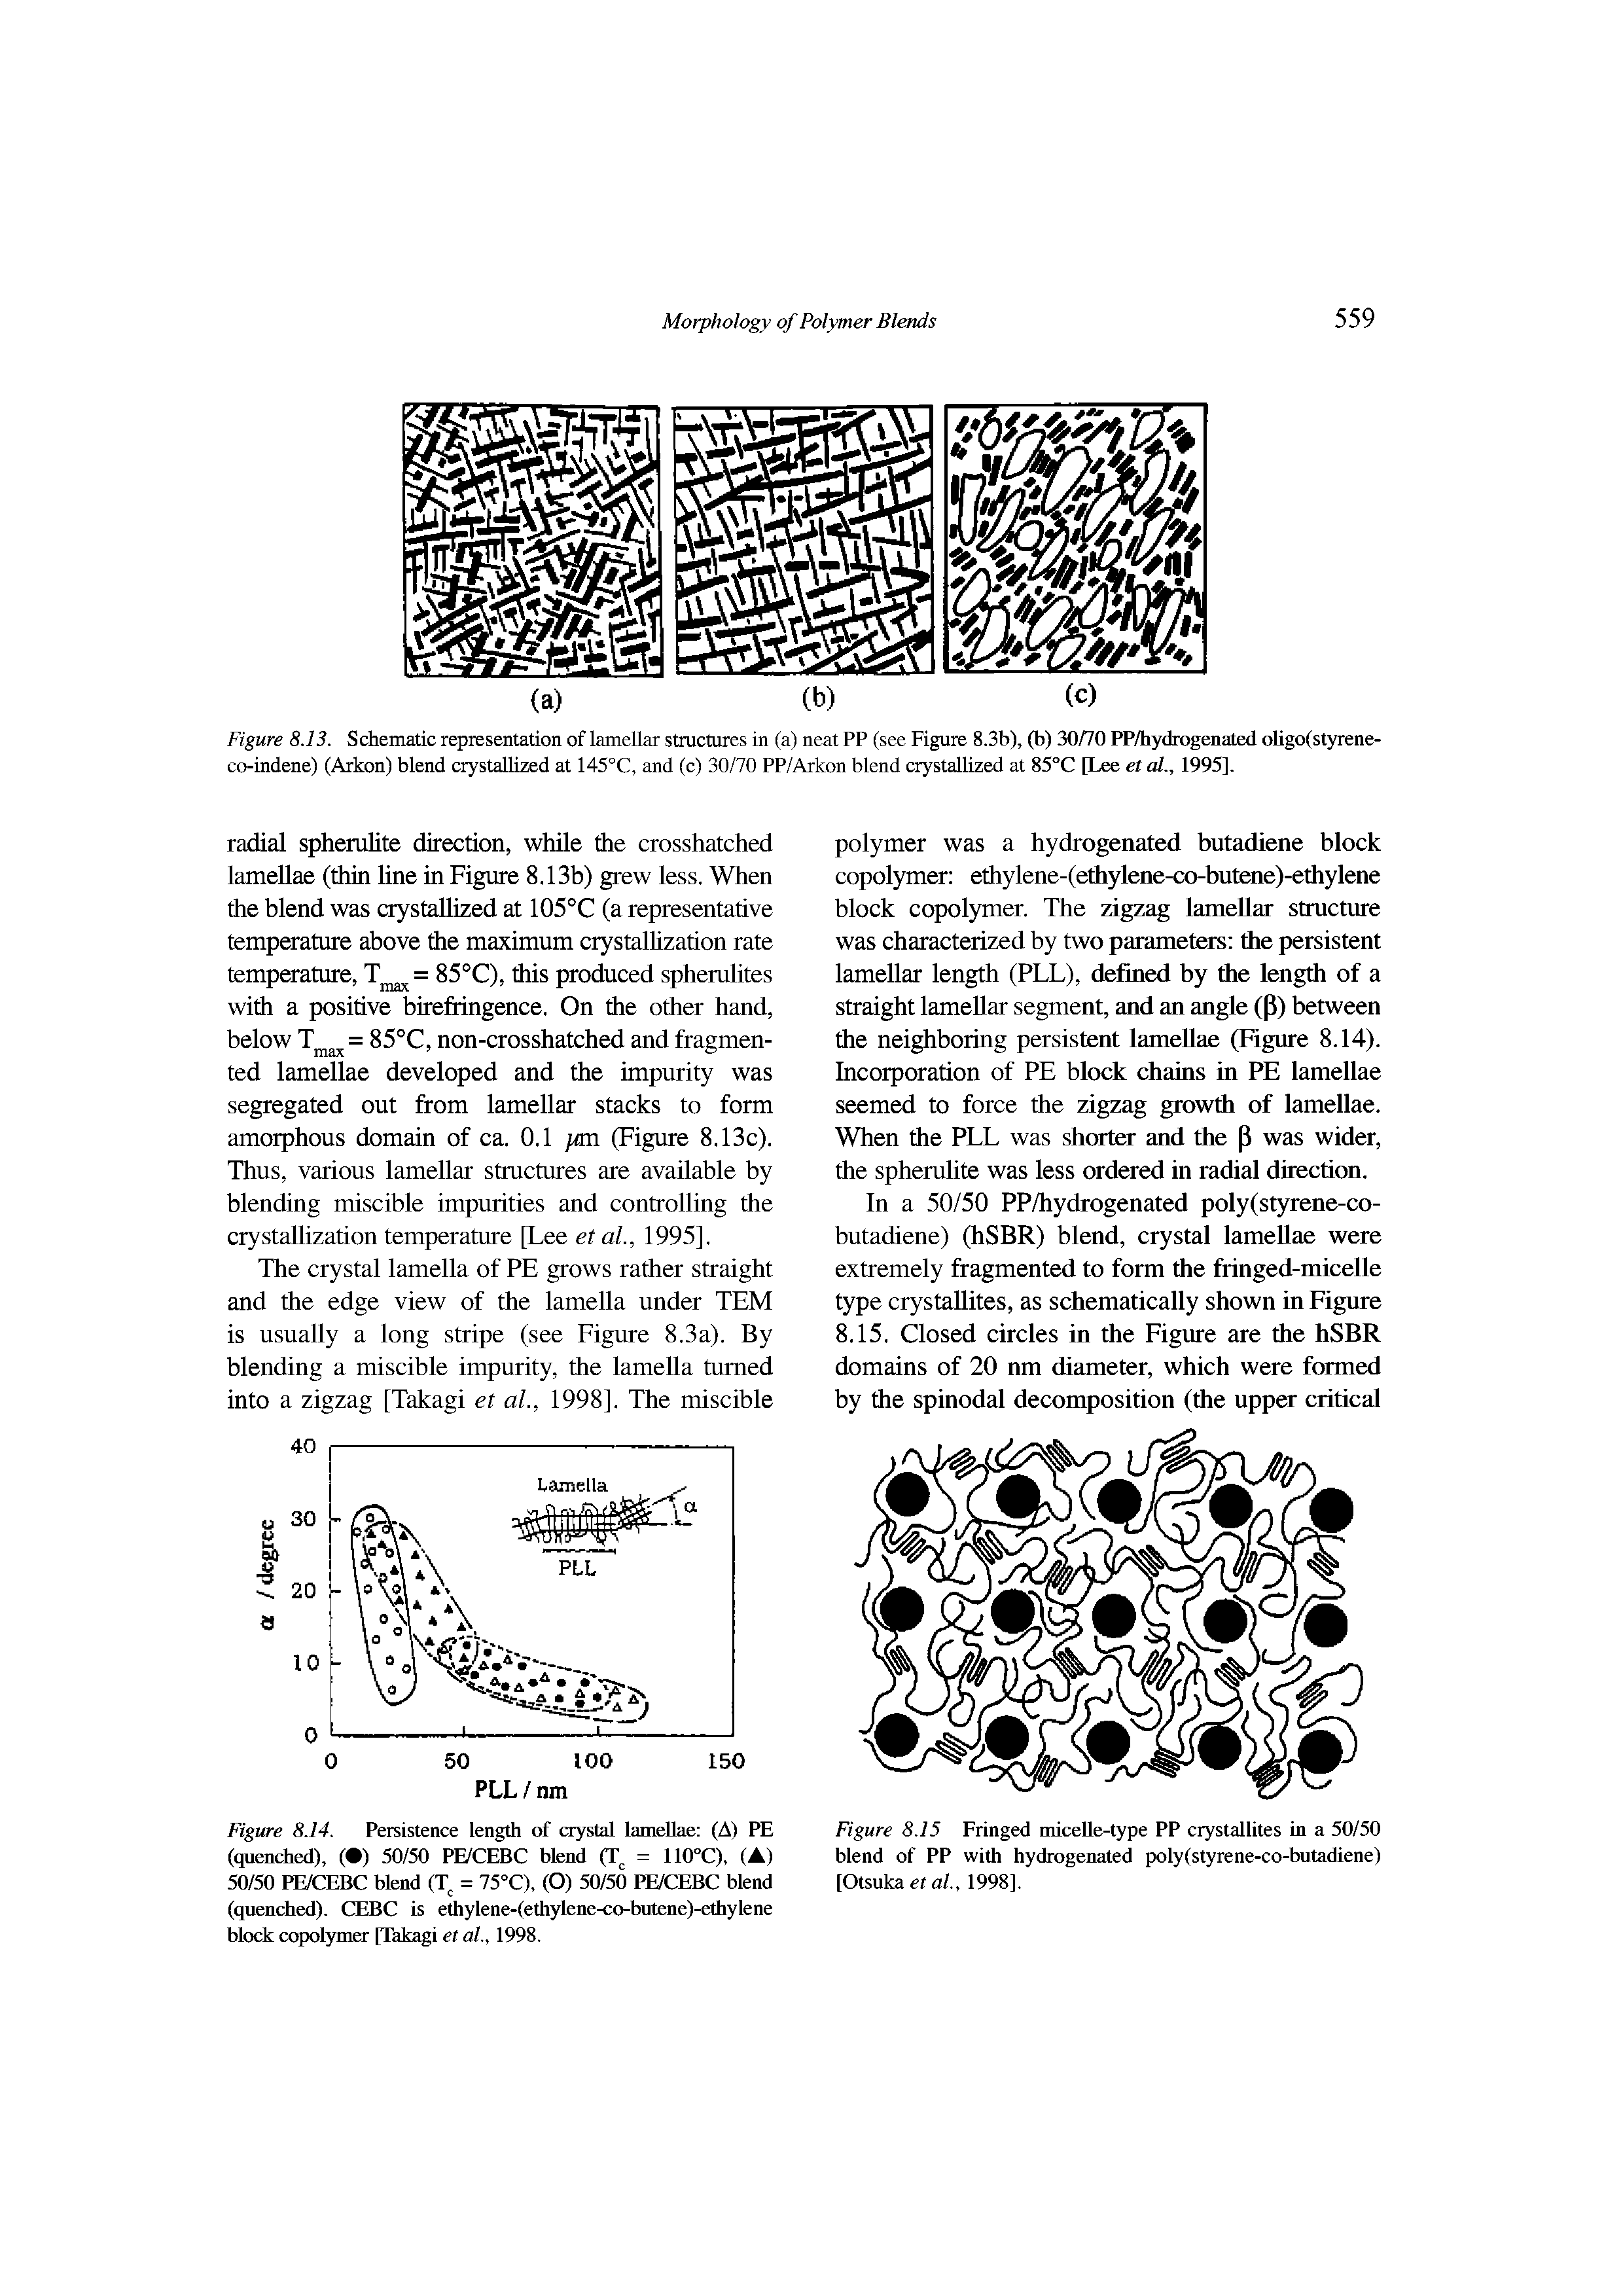 Figure 8.14. Persistence length of crystal lamellae (A) PE (quenched), ( ) 50/50 PE/CEBC blend (T = 110°C), (A) 50/50 PE/CEBC blend (T = 75X), (O) 50/50 PE/CEBC blend (quenched). CEBC is ethylene-(ethylene-co-butene)-ethylene block copolymer [Takagi et al., 1998.